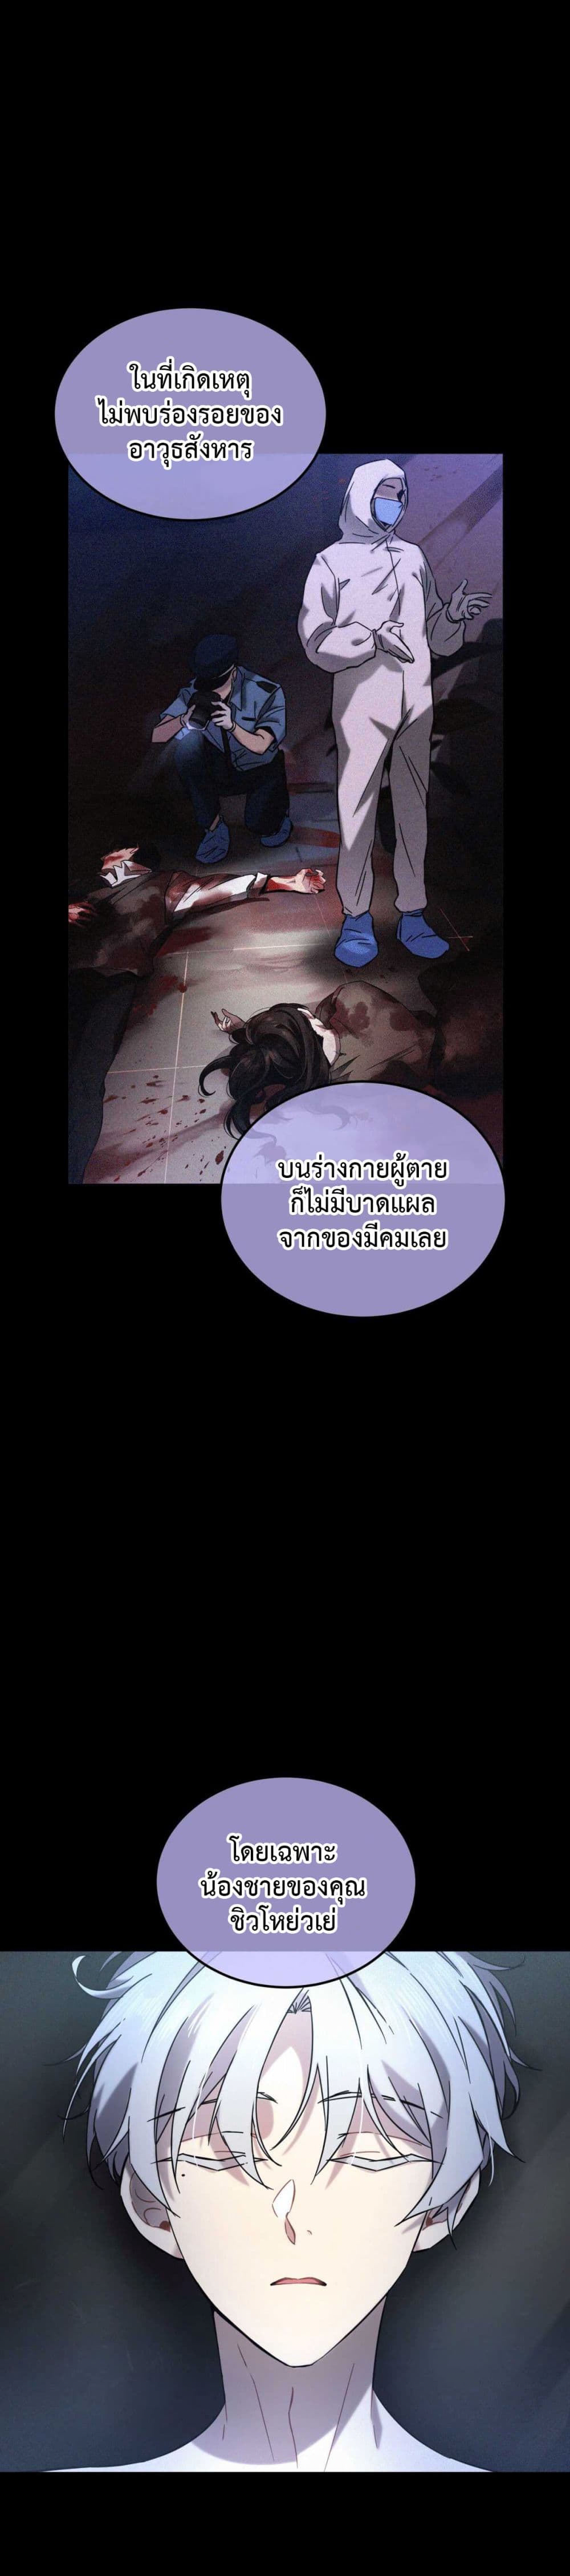 Anemone Dead or Alive 3 (7)